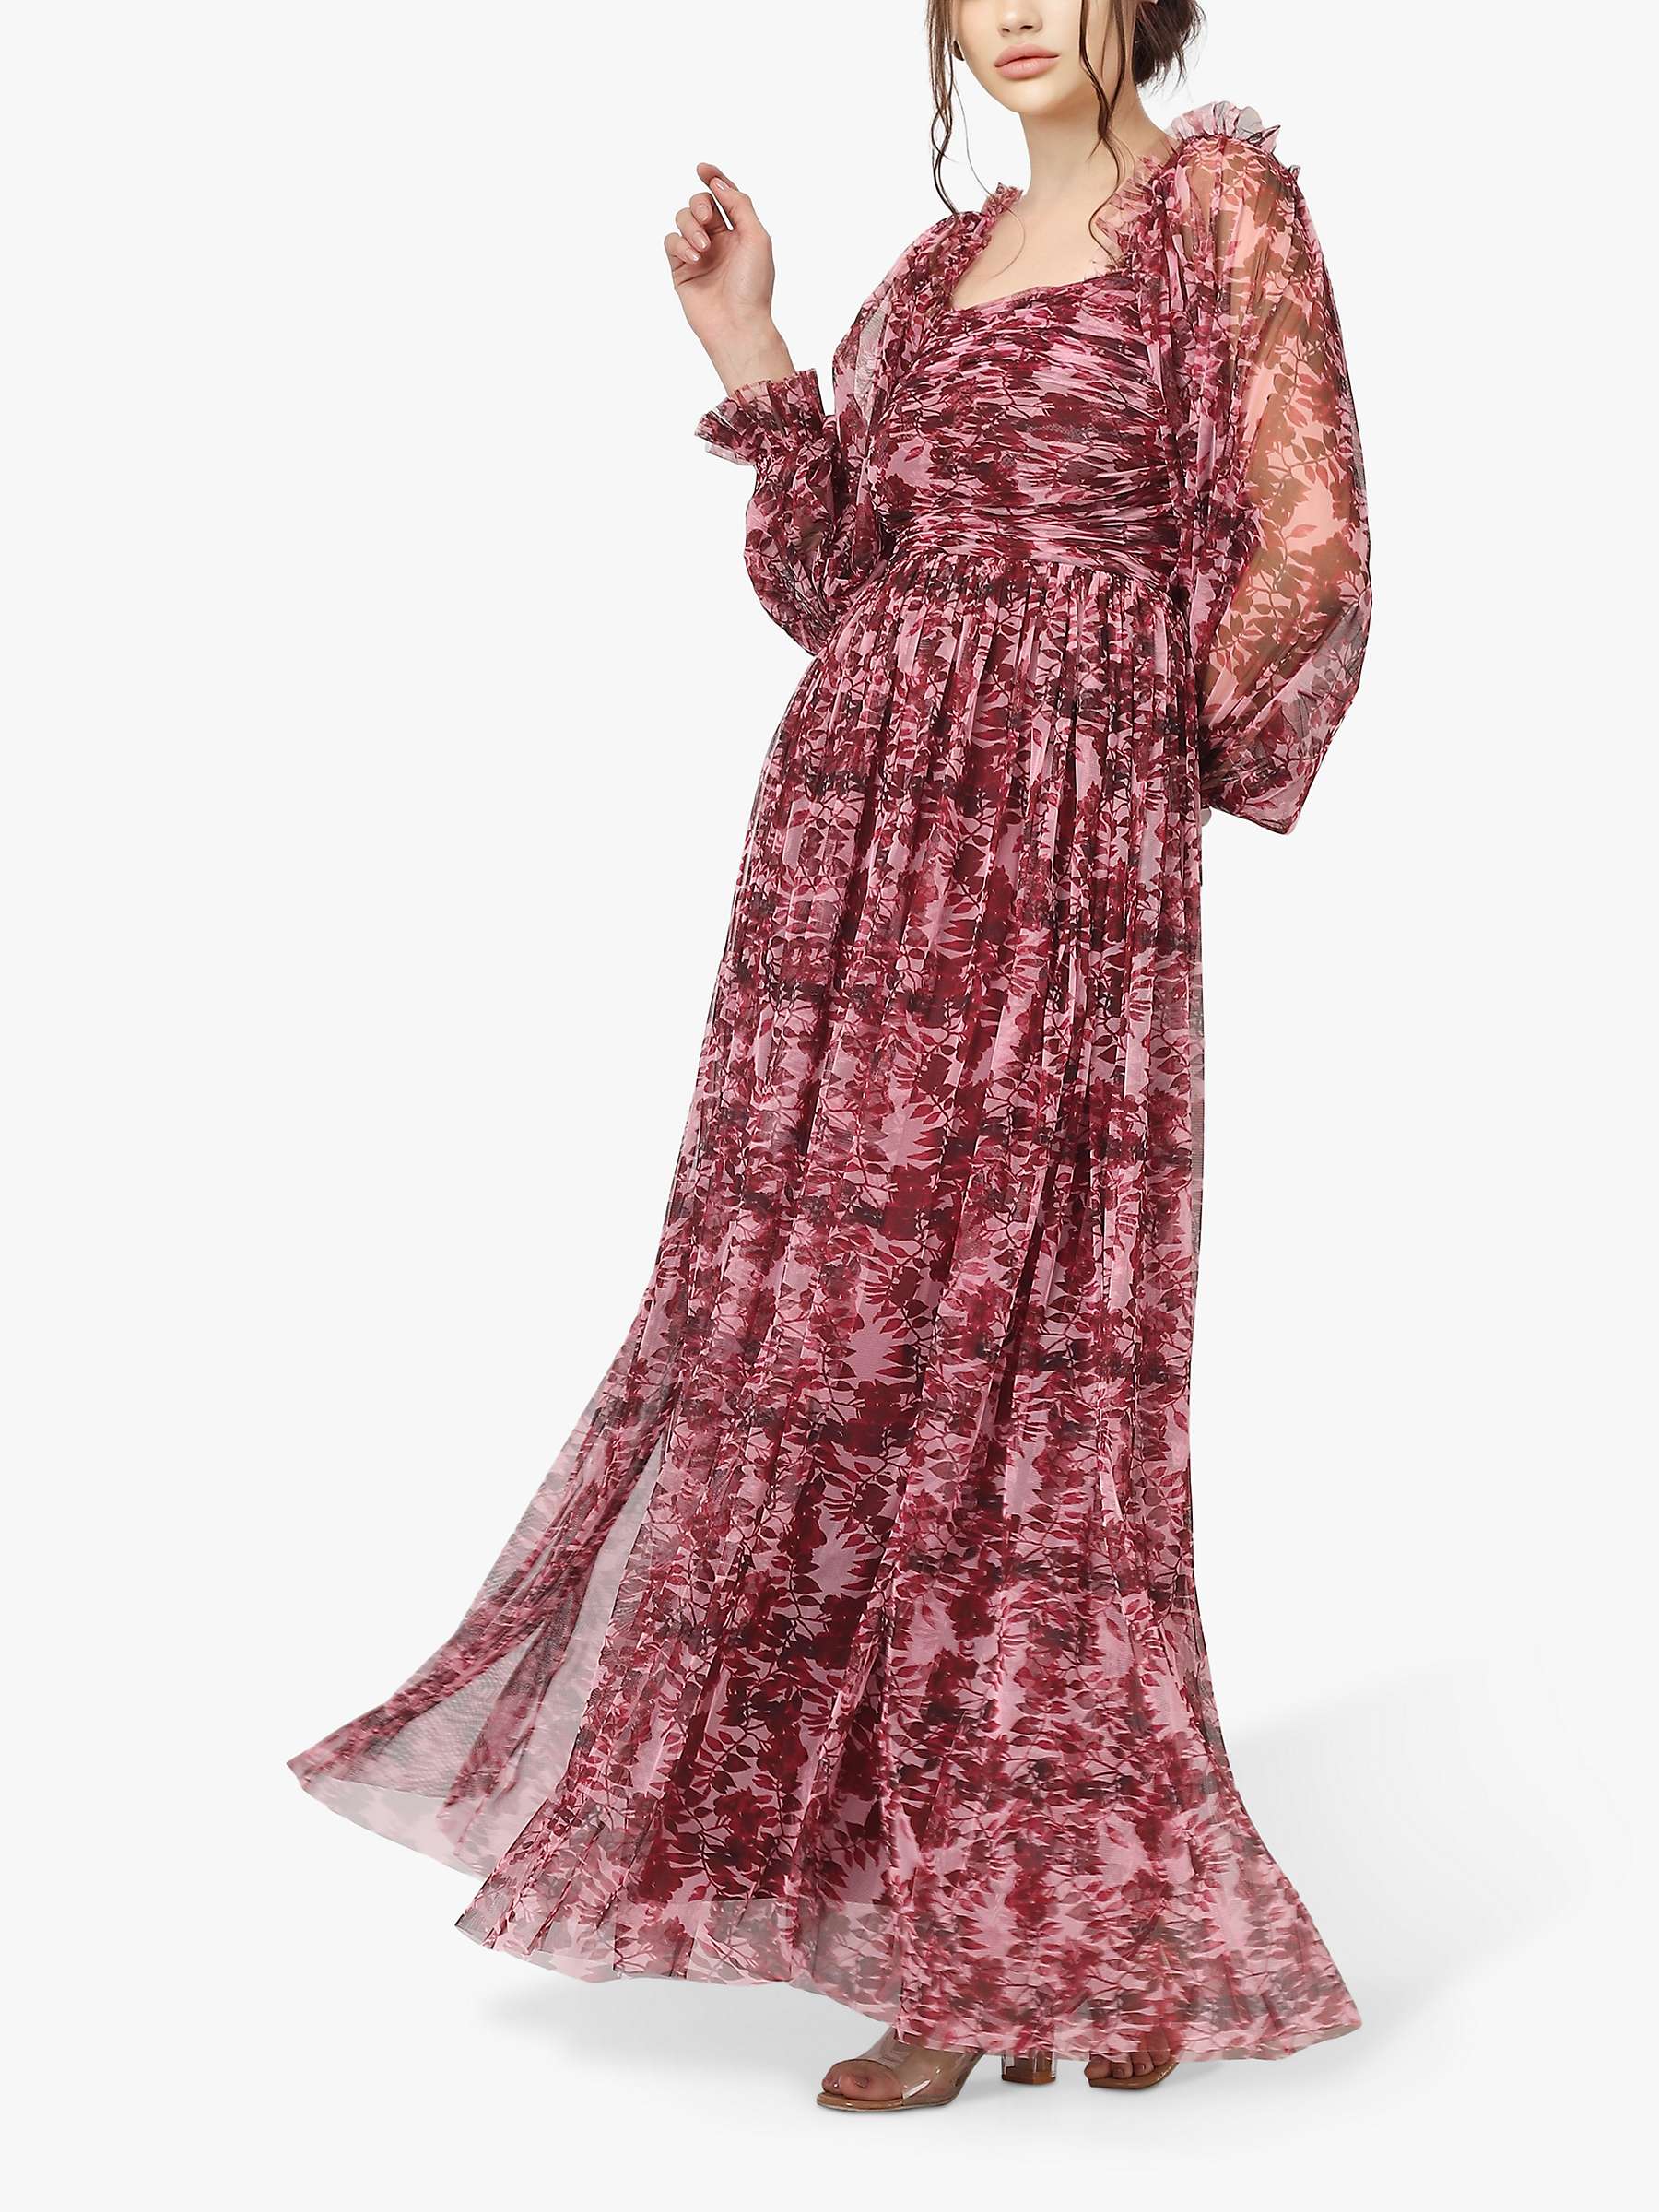 Buy Lace & Beads Lana Floral Print Mesh Maxi Dress, Burgundy/Pink Online at johnlewis.com